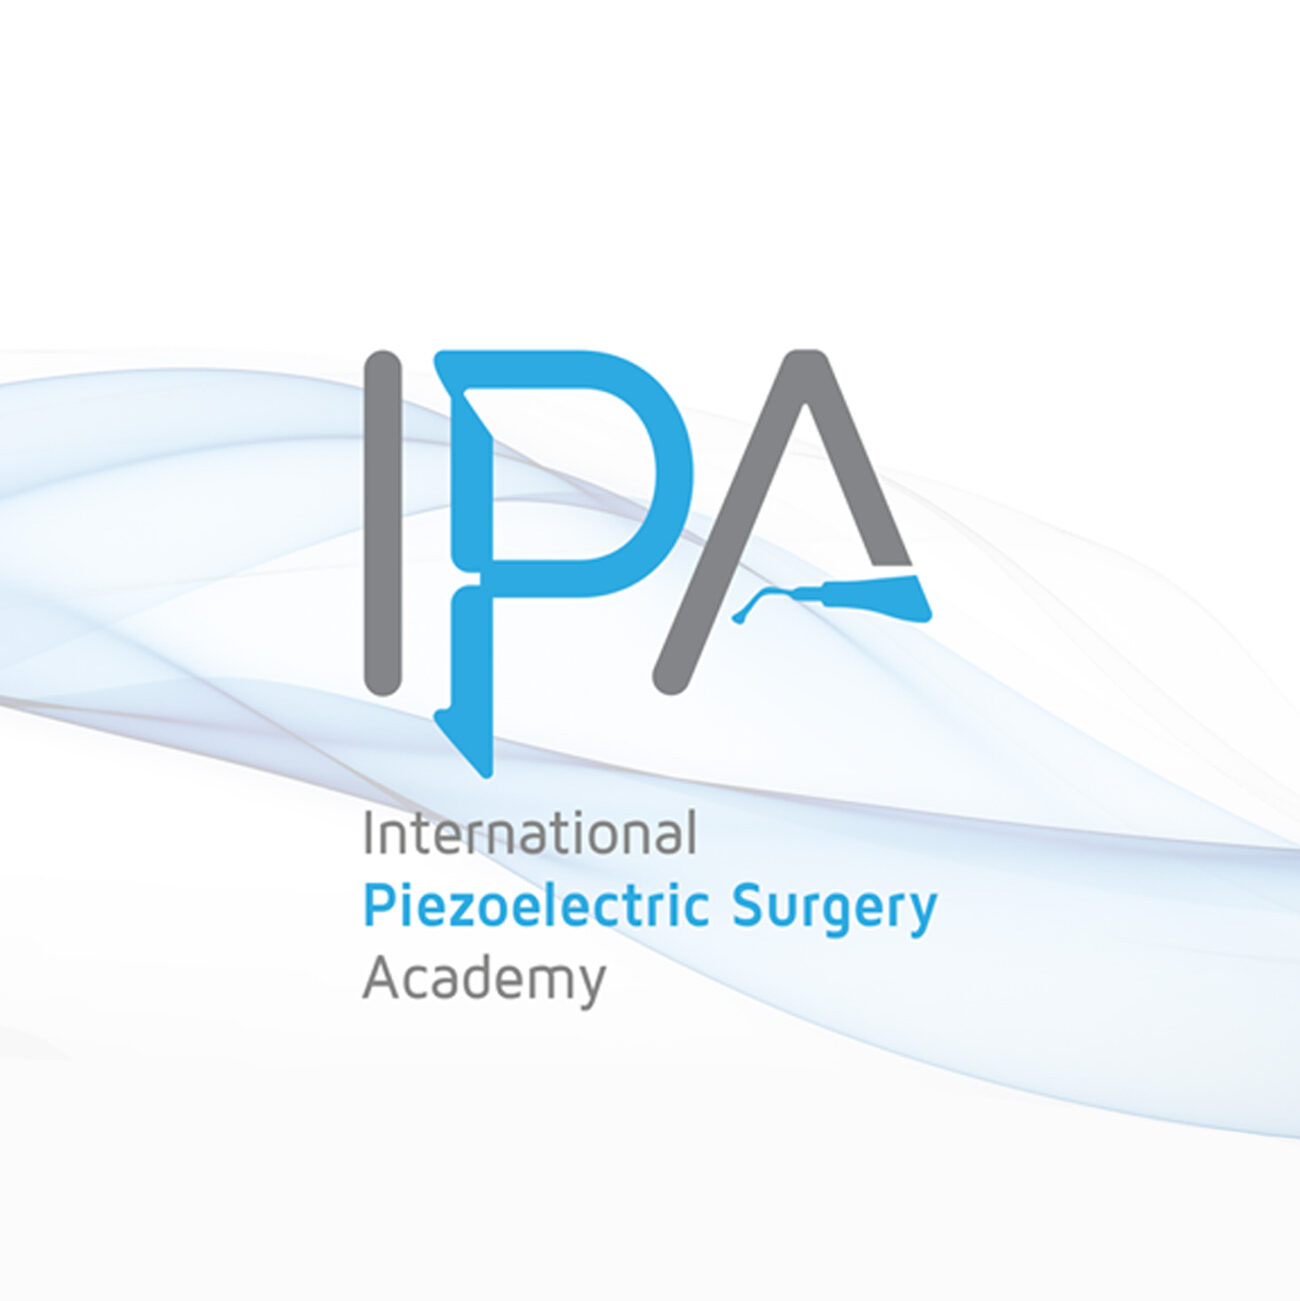 Academy-international-surgery-IPA-portfolio-clienti-mercomm-agenzia-comunicazione